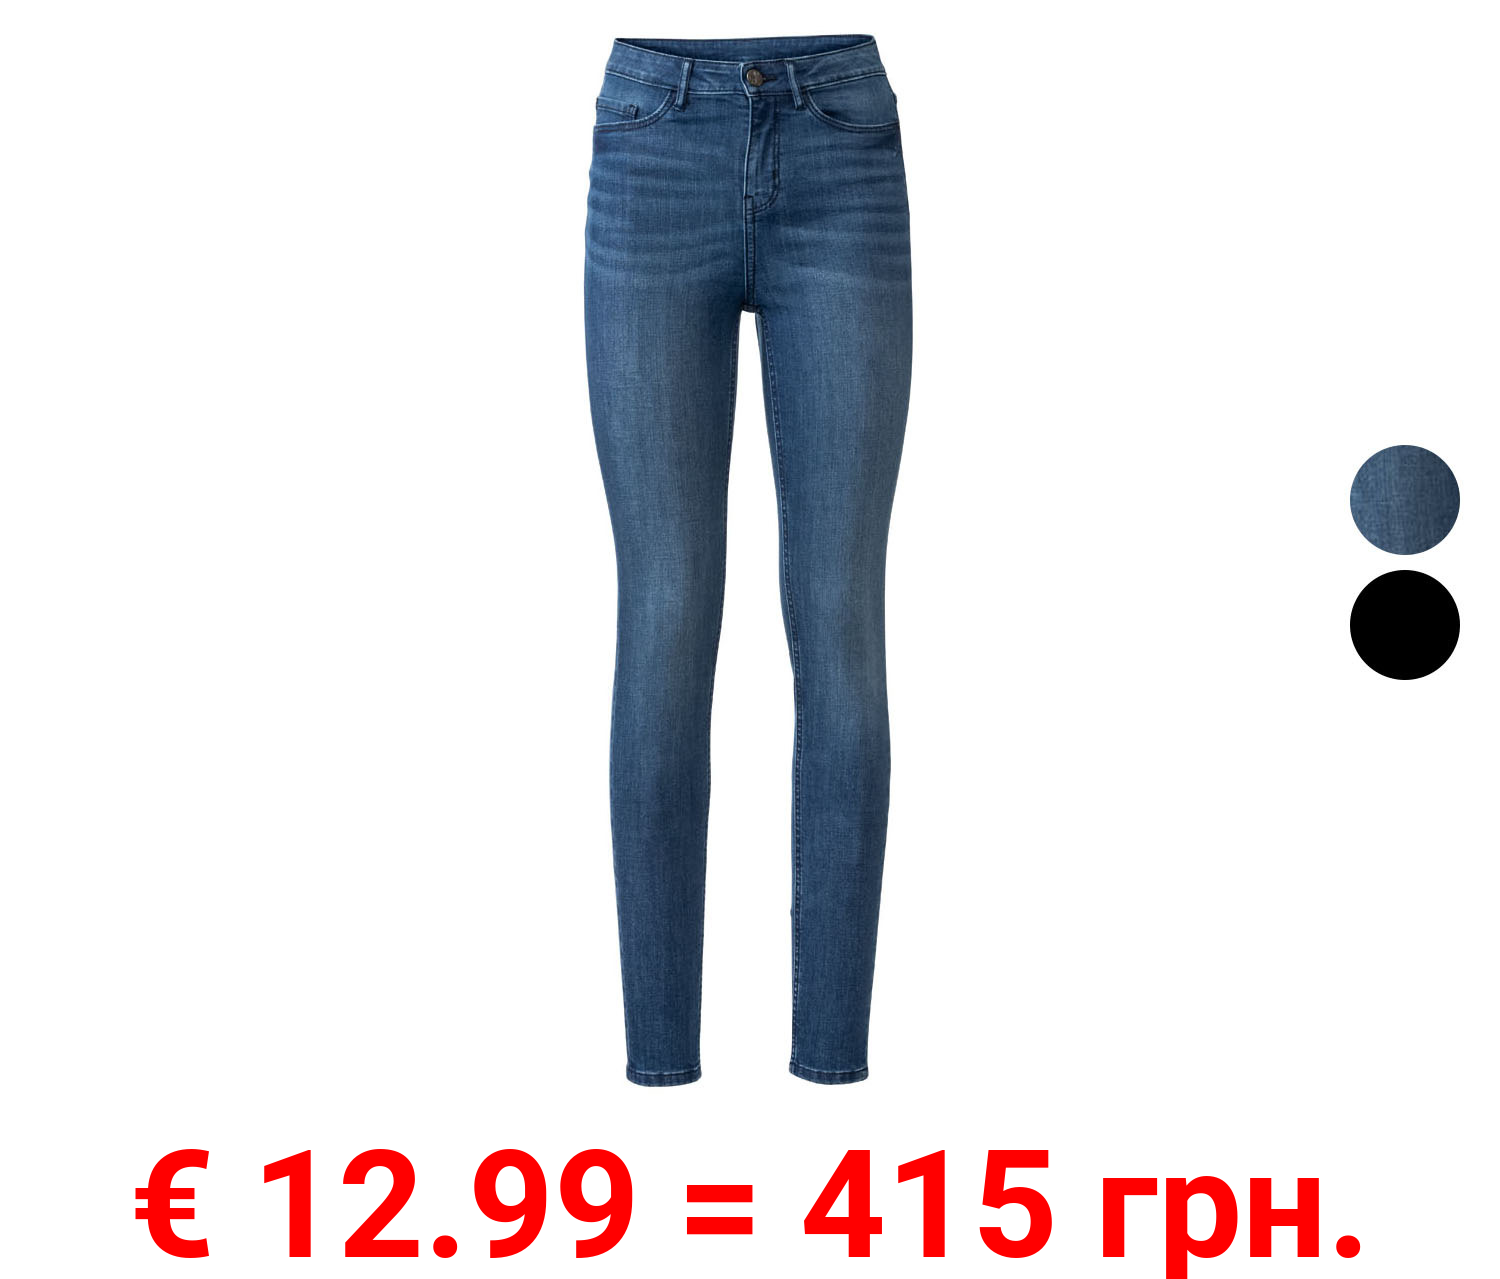 ESMARA® Jeans Damen, High Waist, Super Skinny